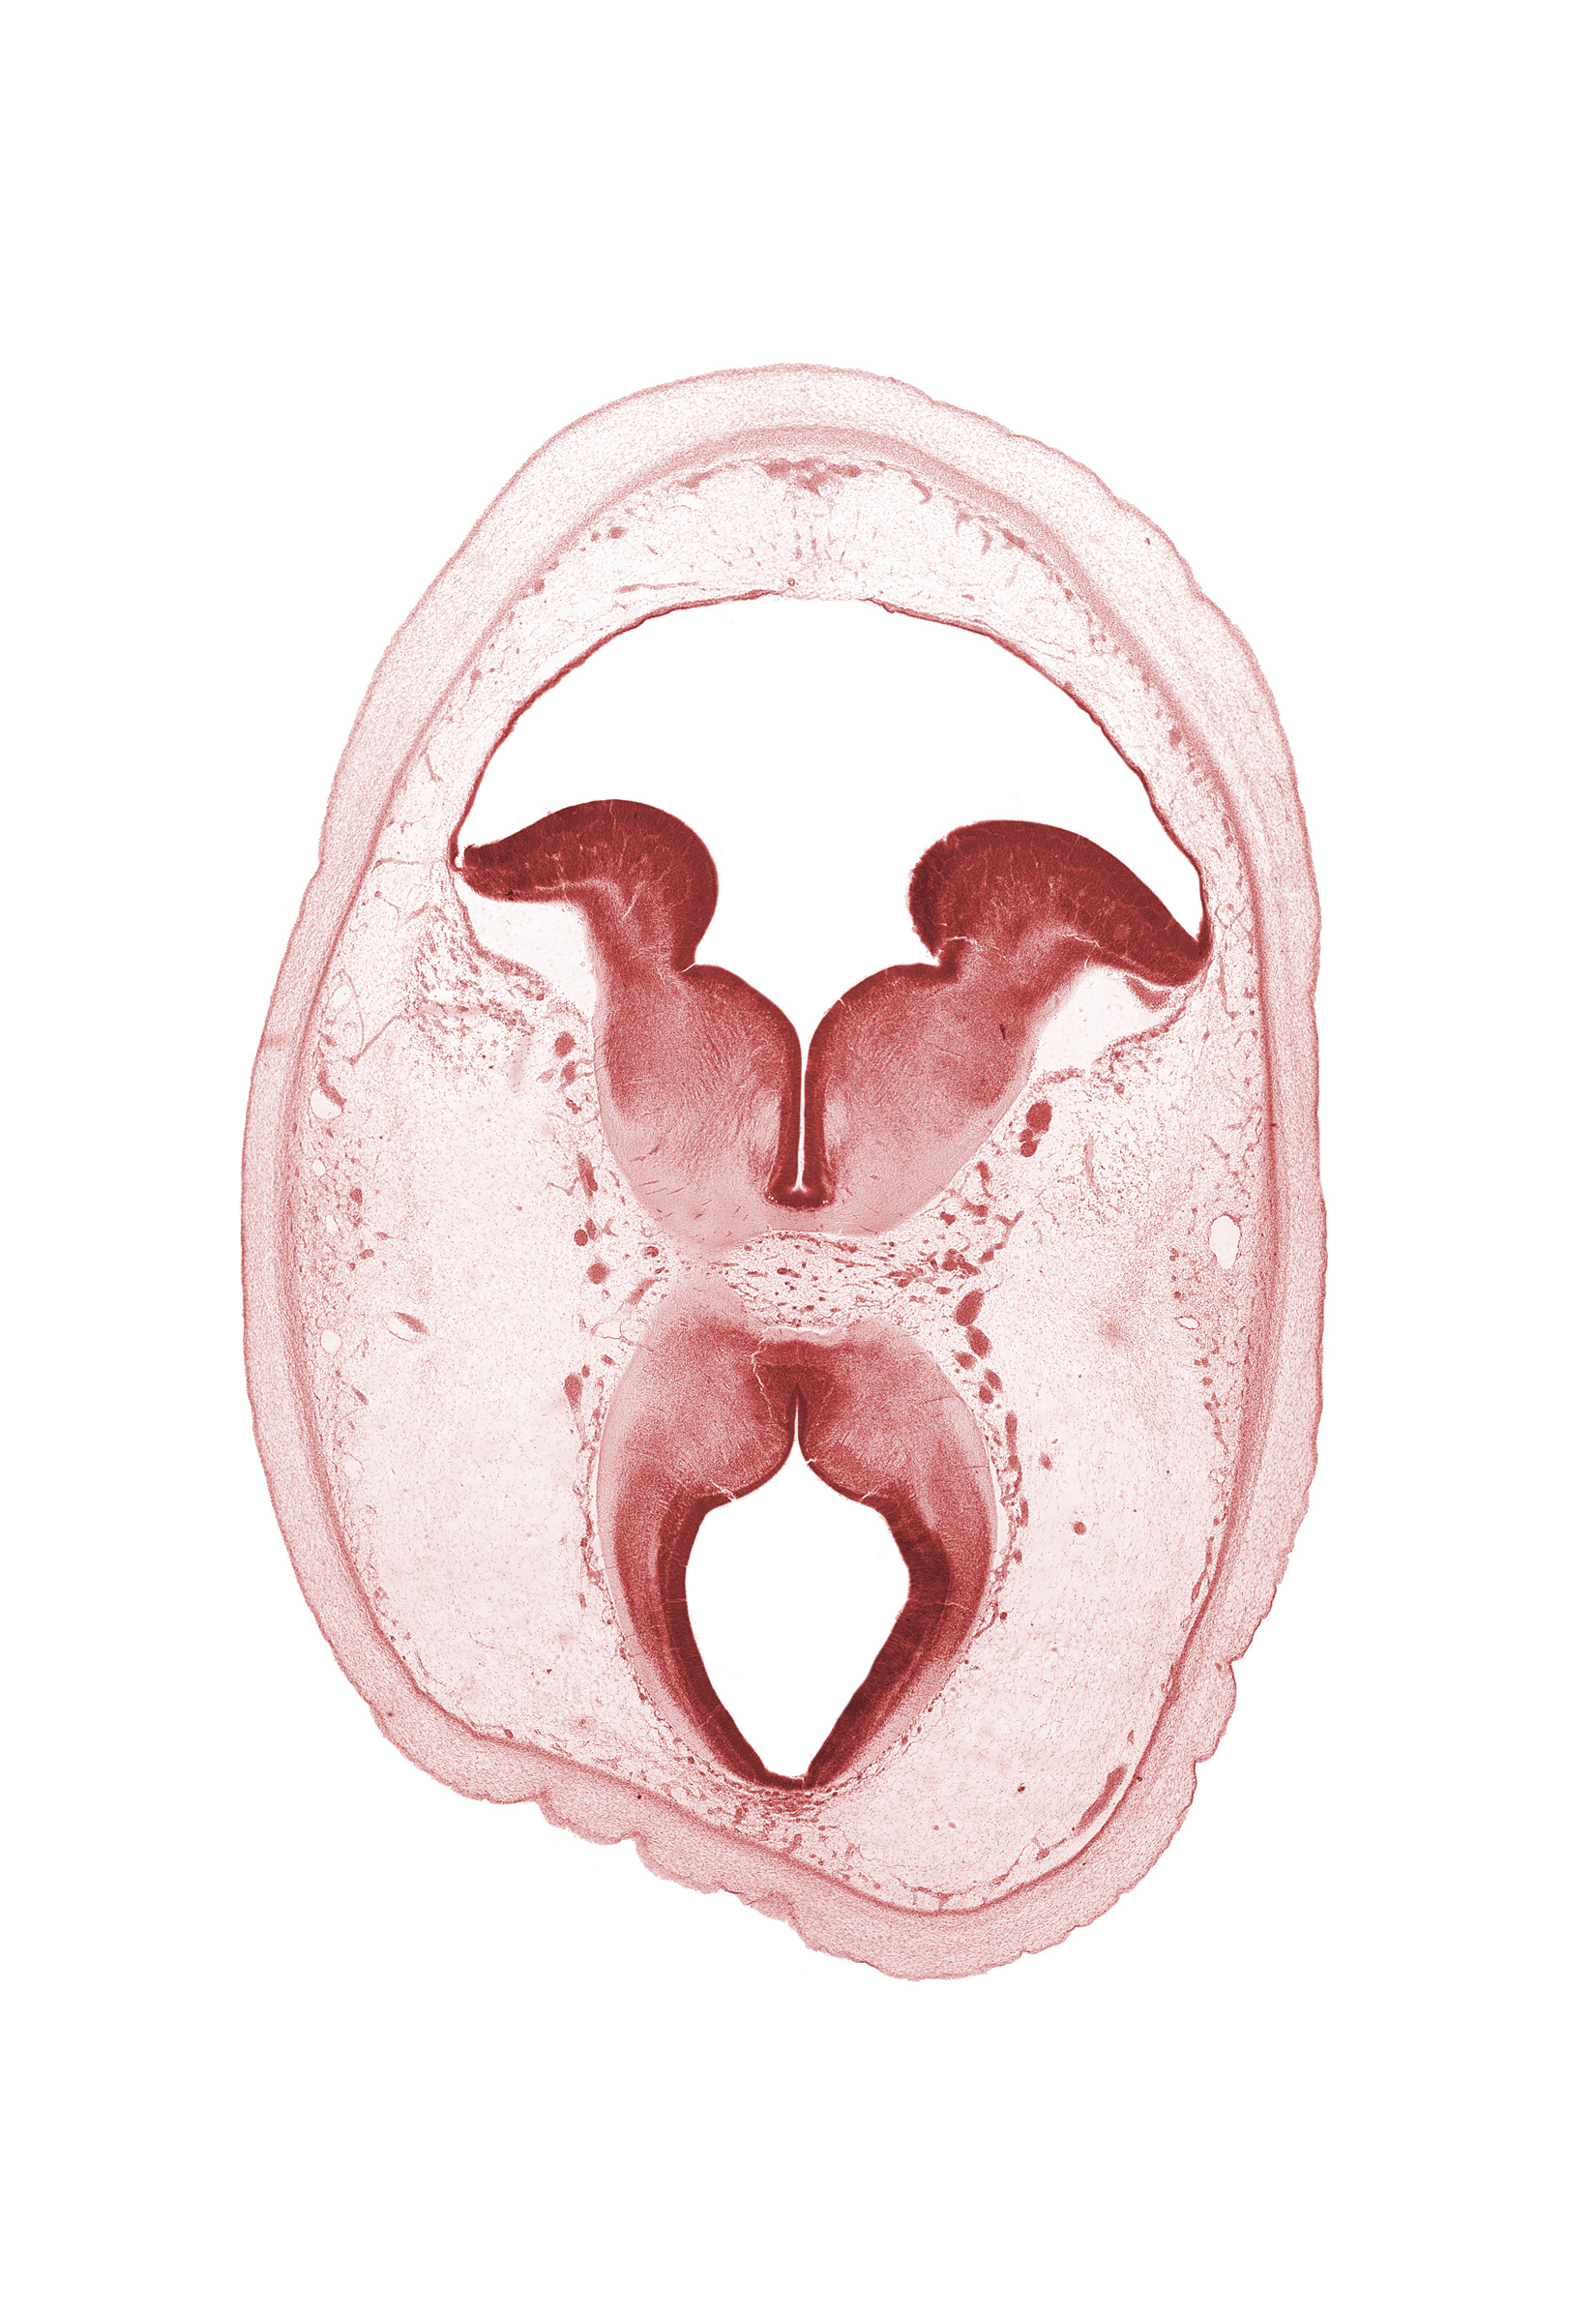 artifact separation(s), basis pedunculi of pons region (metencephalon), cerebral aqueduct (mesocoele), habenulo-interpeduncular tract, osteogenic layer, posterior cerebellar artery, root of oculomotor nerve (CN III), subarachnoid space, sulcus limitans, superior cerebellar artery, surface ectoderm, tectum, tegmentum, trochlear nerve (CN IV), vascular plexus